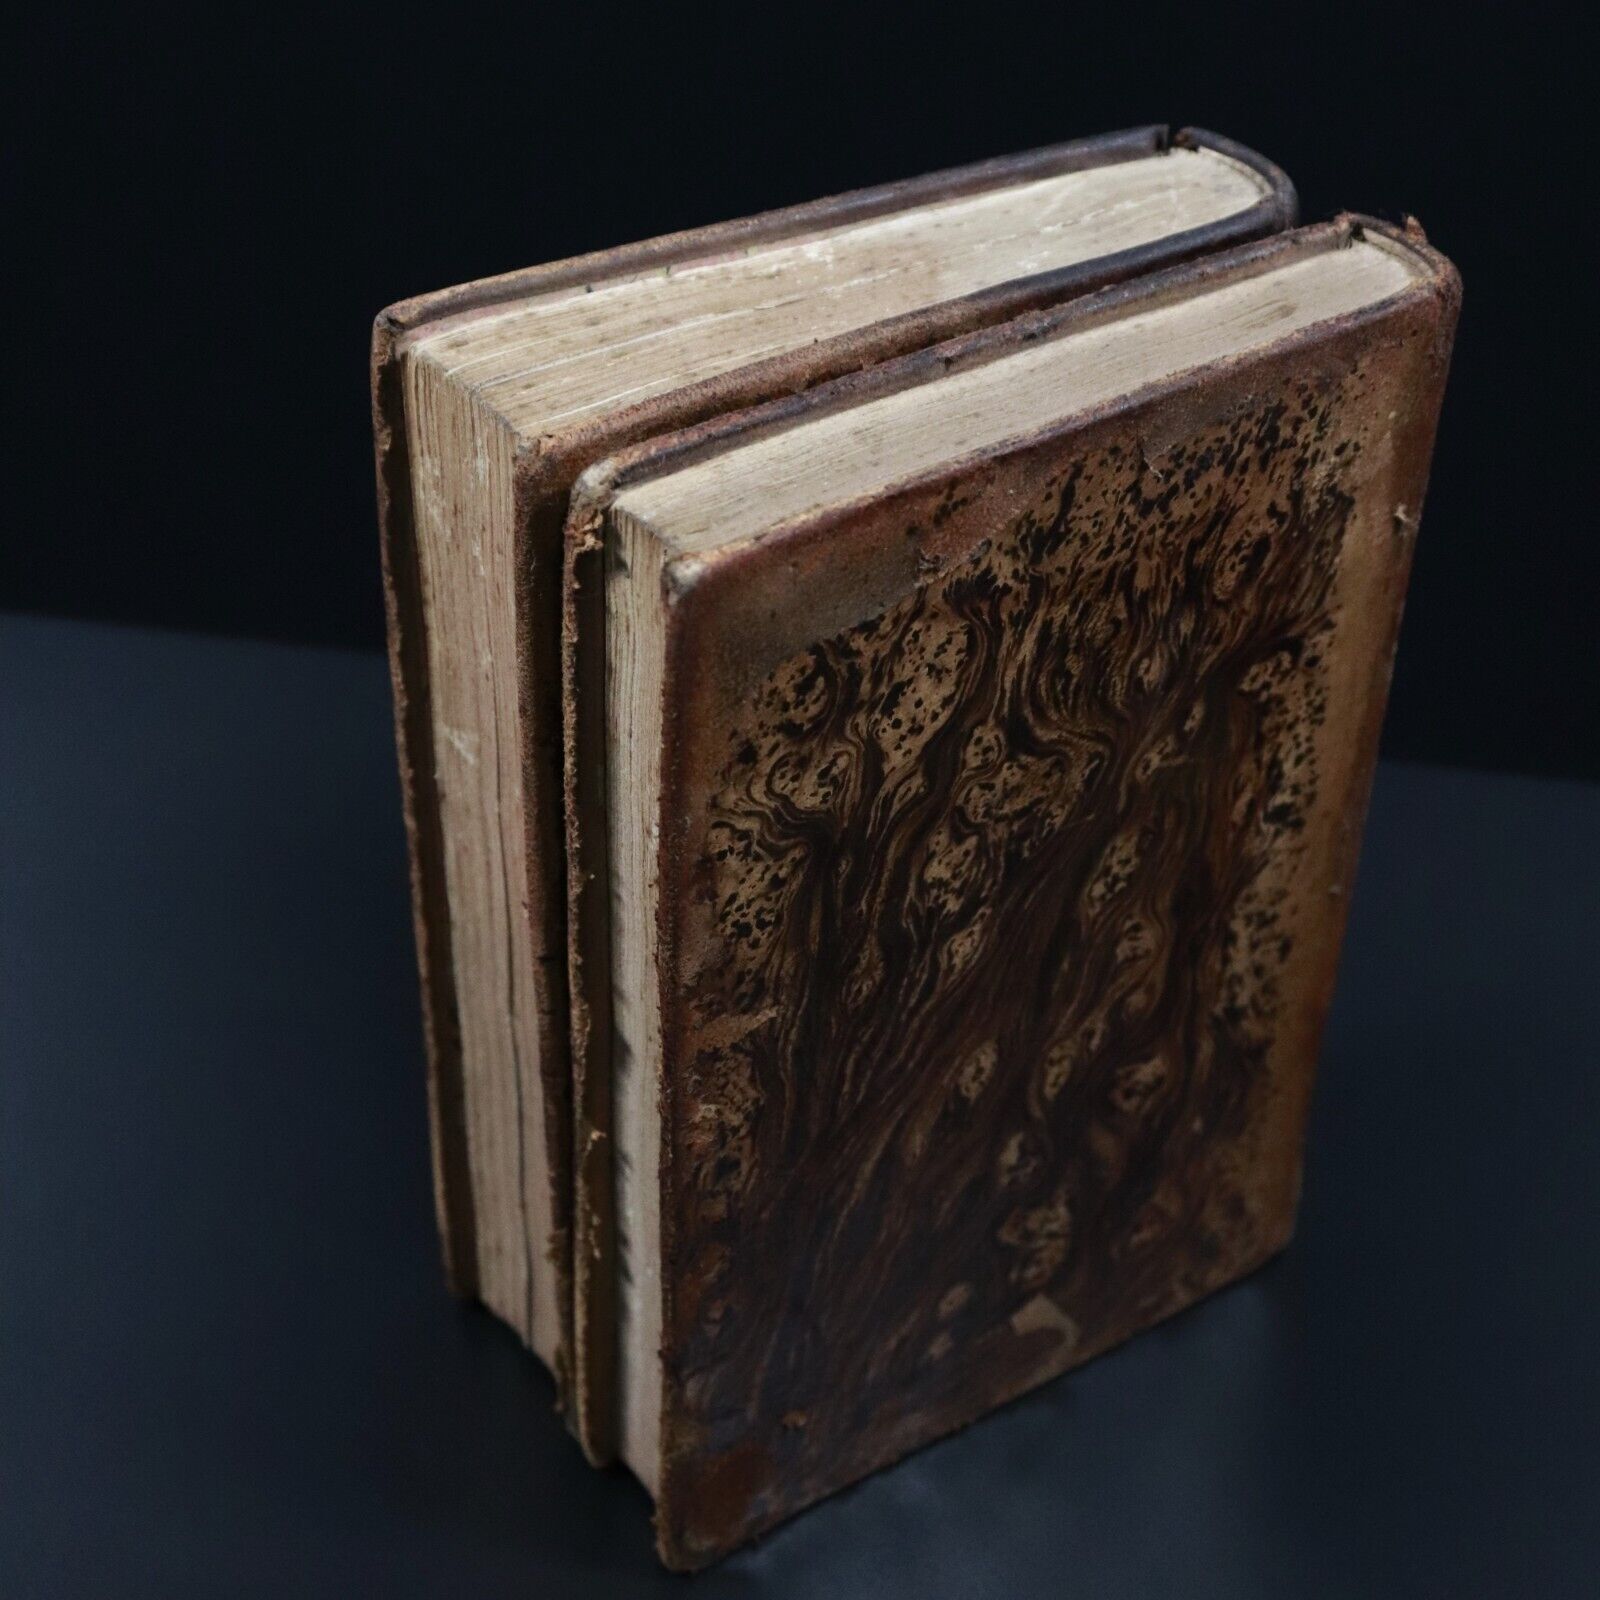 1838 2vol Obras Literarias de D. Francisco Martinez Antique Literature Books